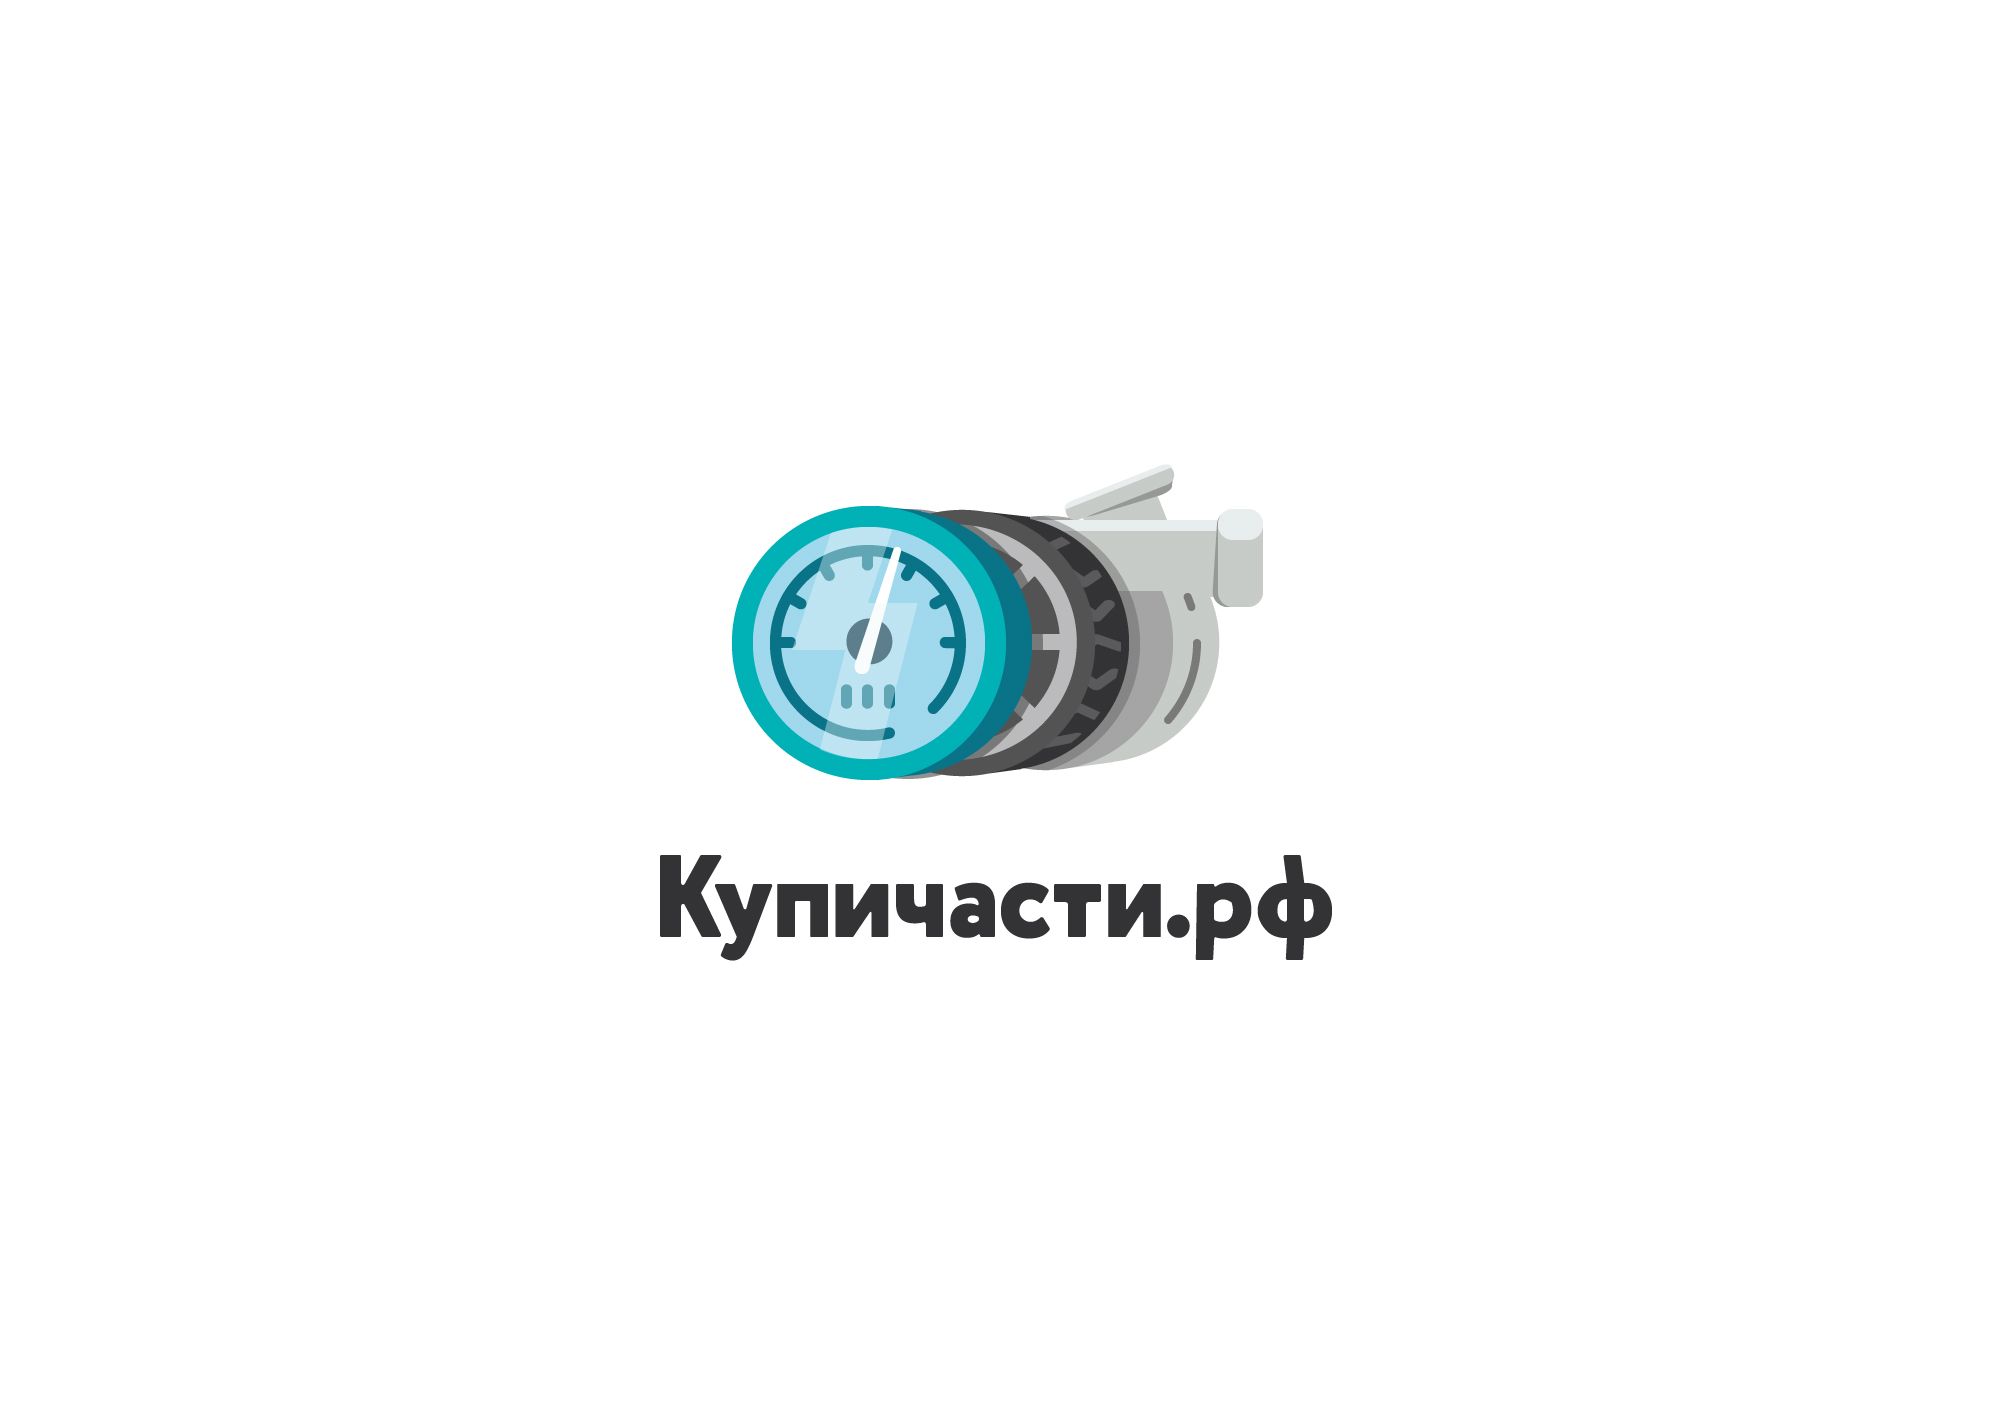 Логотип для купичасти.рф или КупиЧасти.рф или КУПИЧАСТИ.РФ - дизайнер ev-ovse